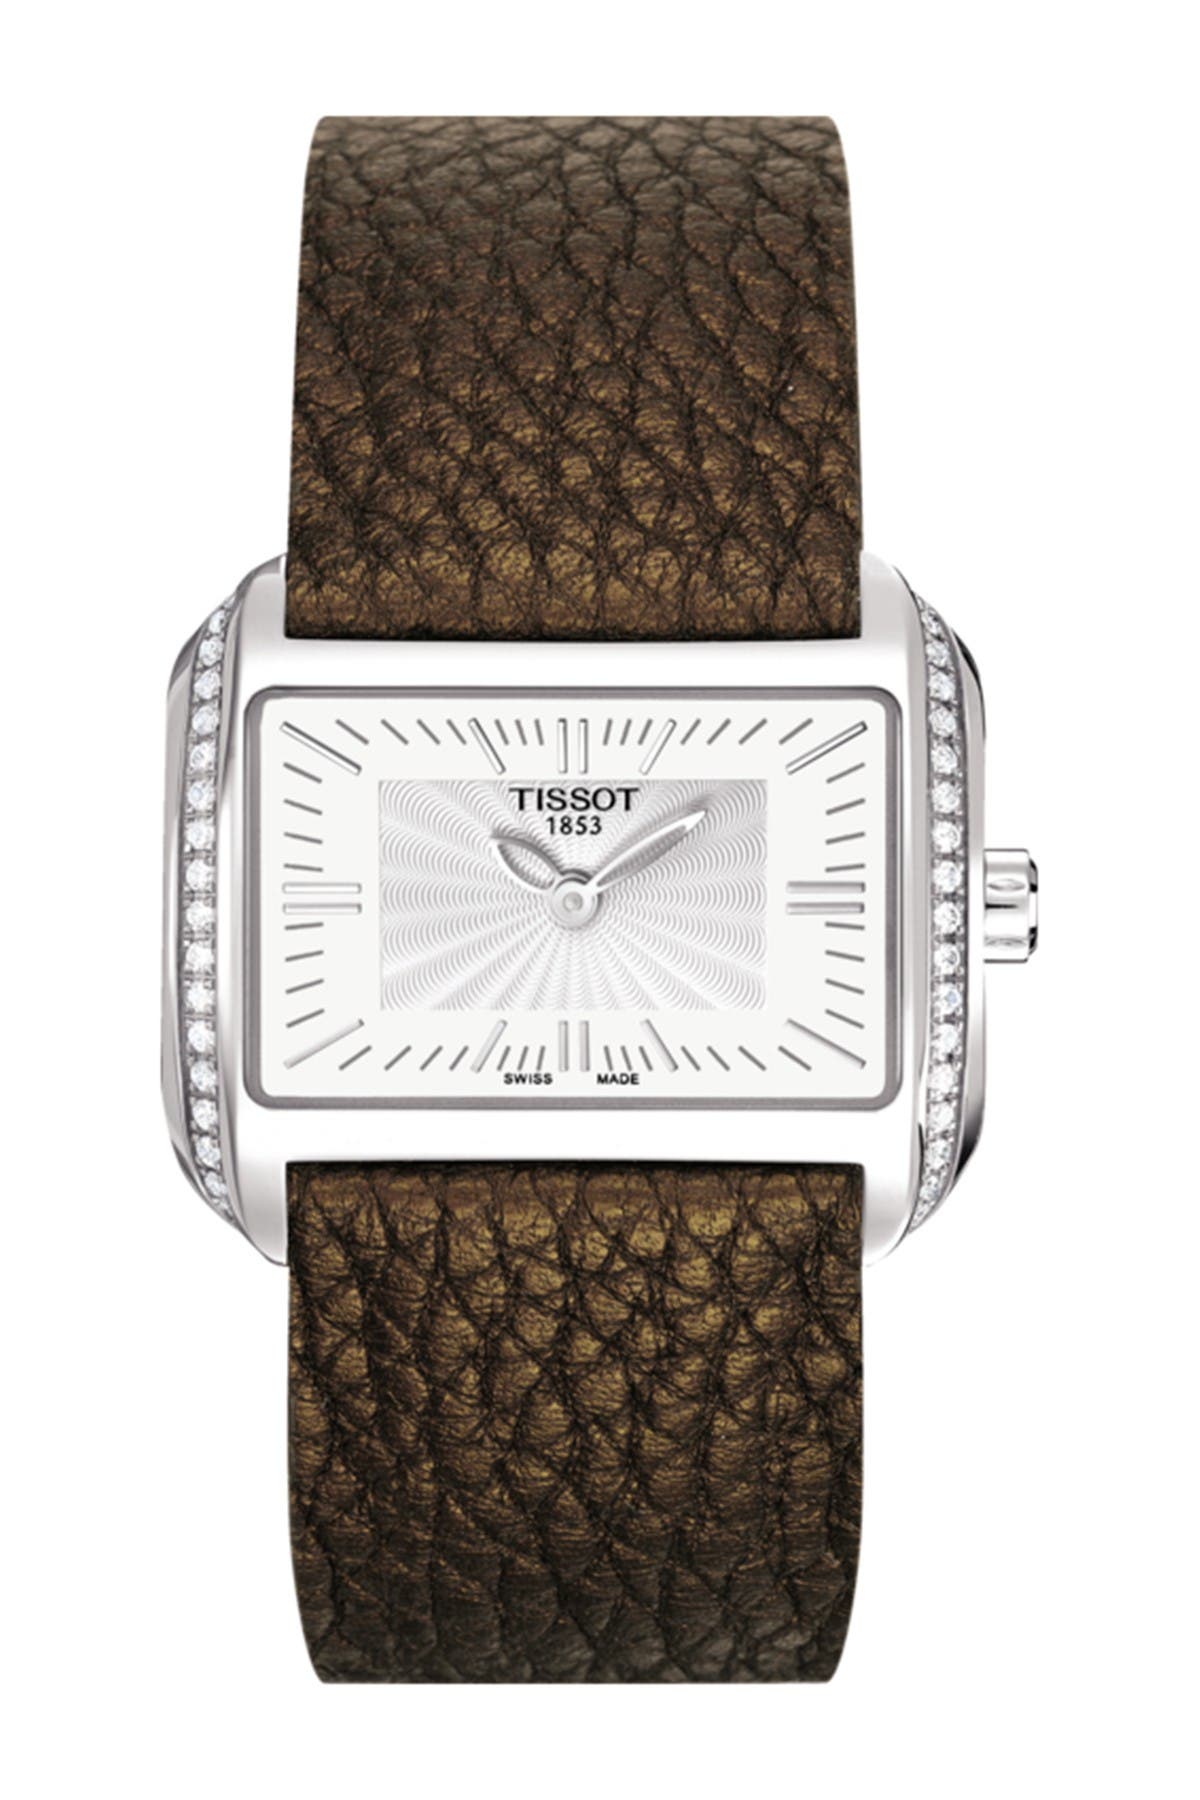 Tissot Women's T-wave Diamond Quartz Watch